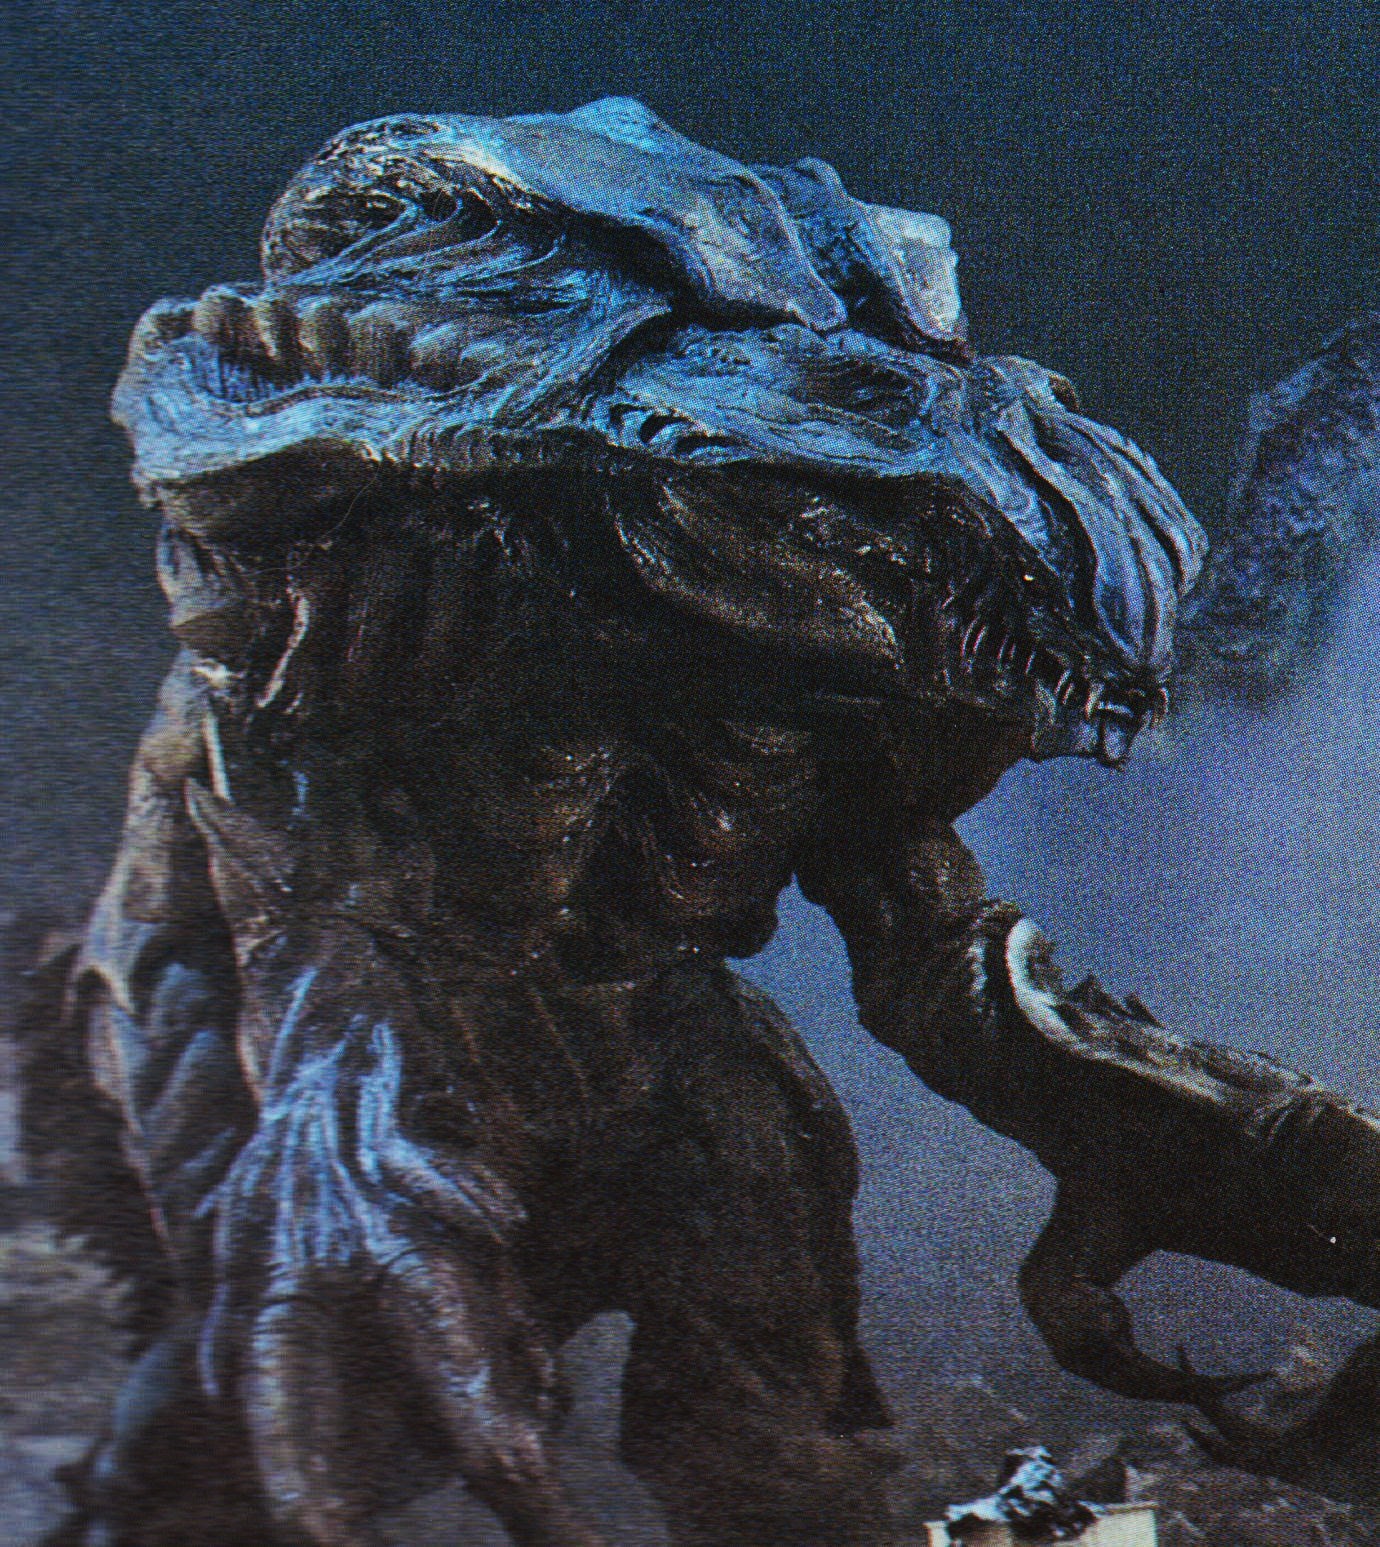 Gorgon Medusa part 2 - My Favourite Planet People